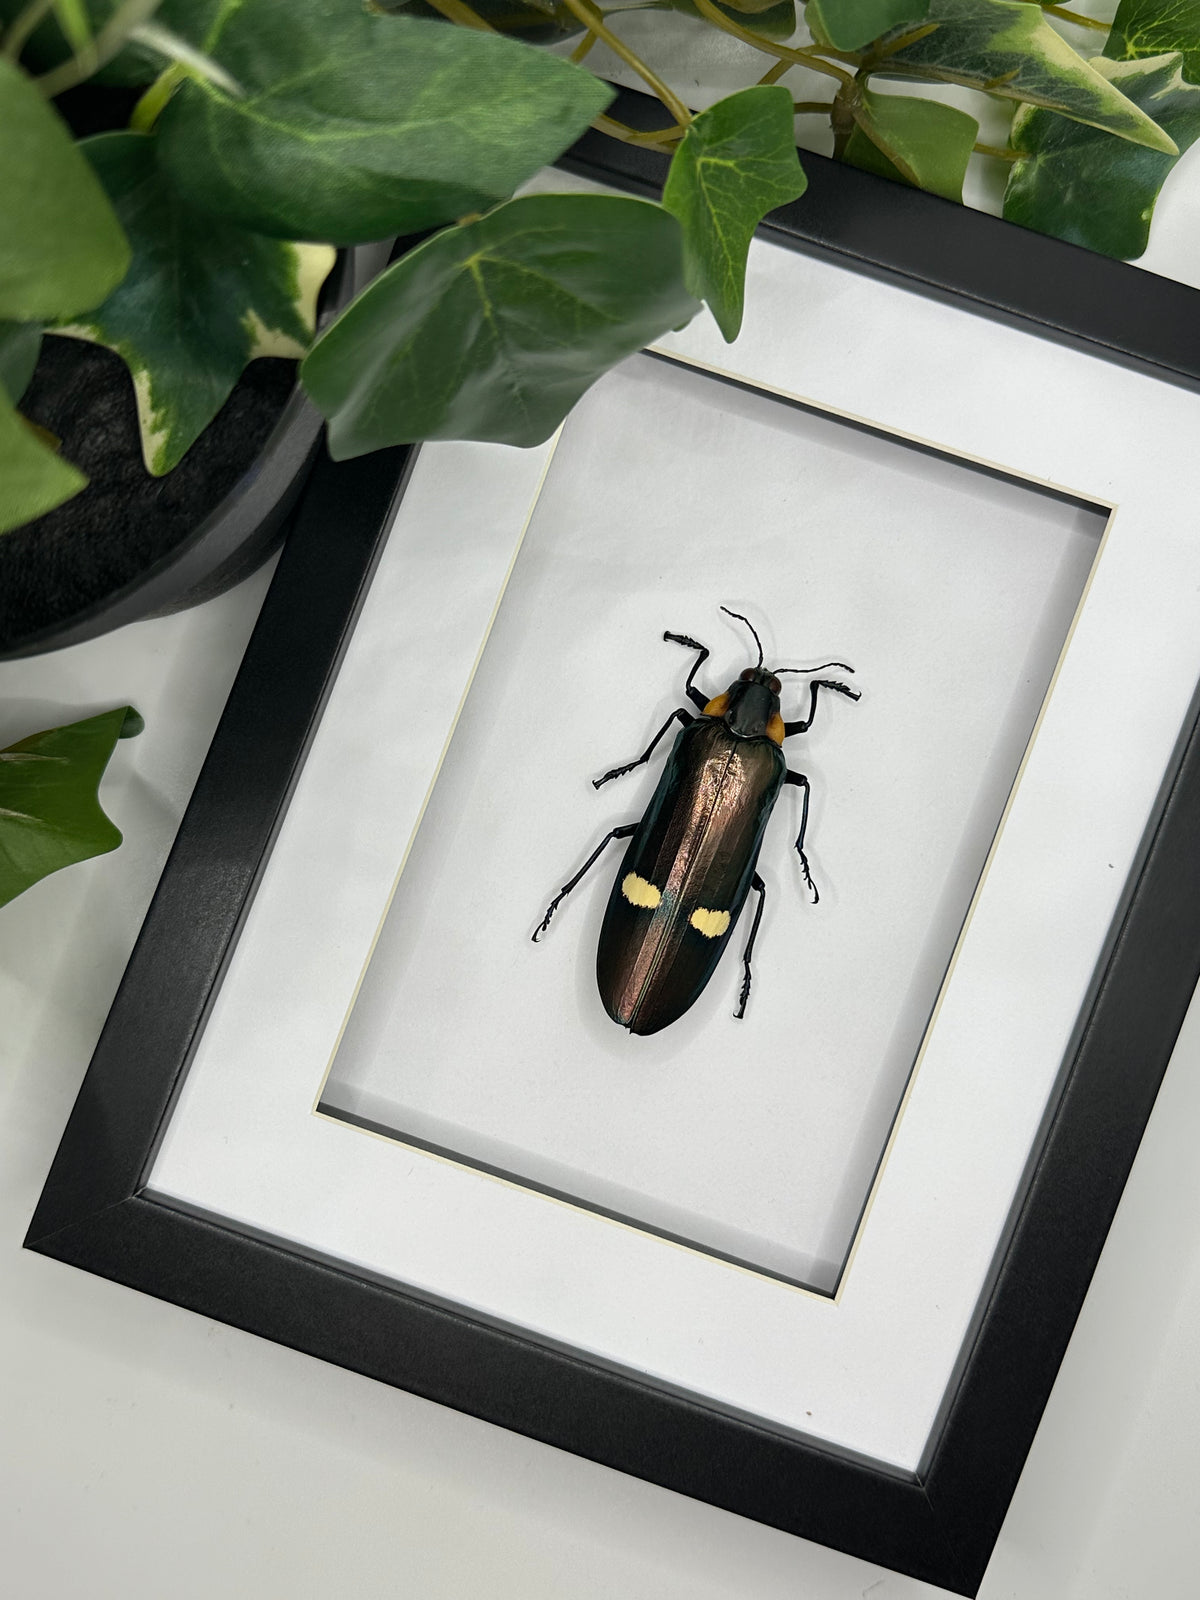 Jewel Beetle / Megaloxantha Bicolor in a frame